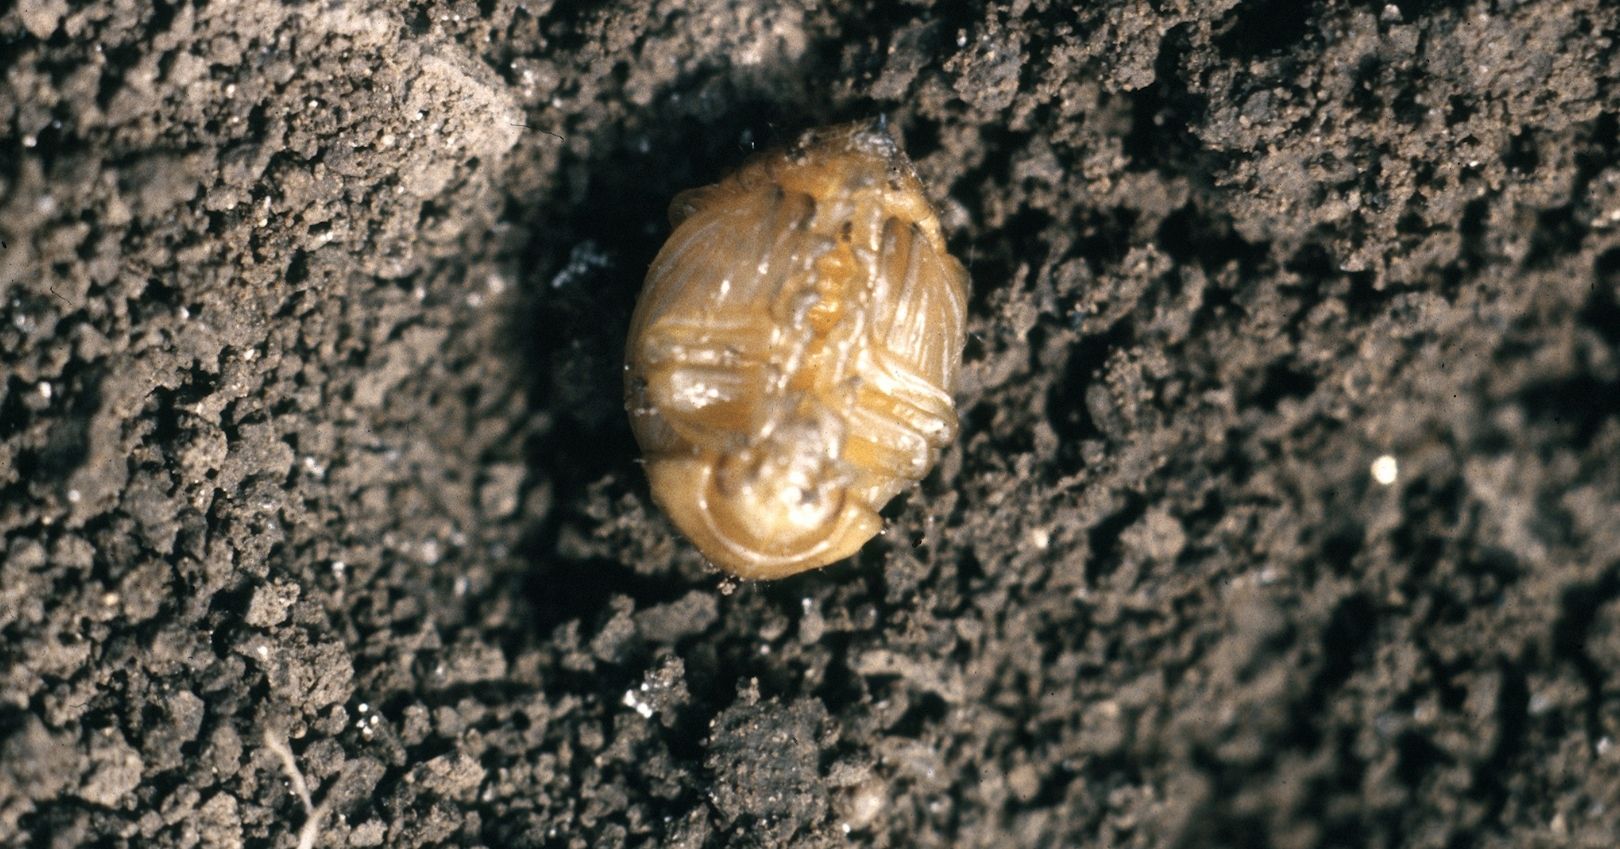 Colorado Potato Beetle Pupa